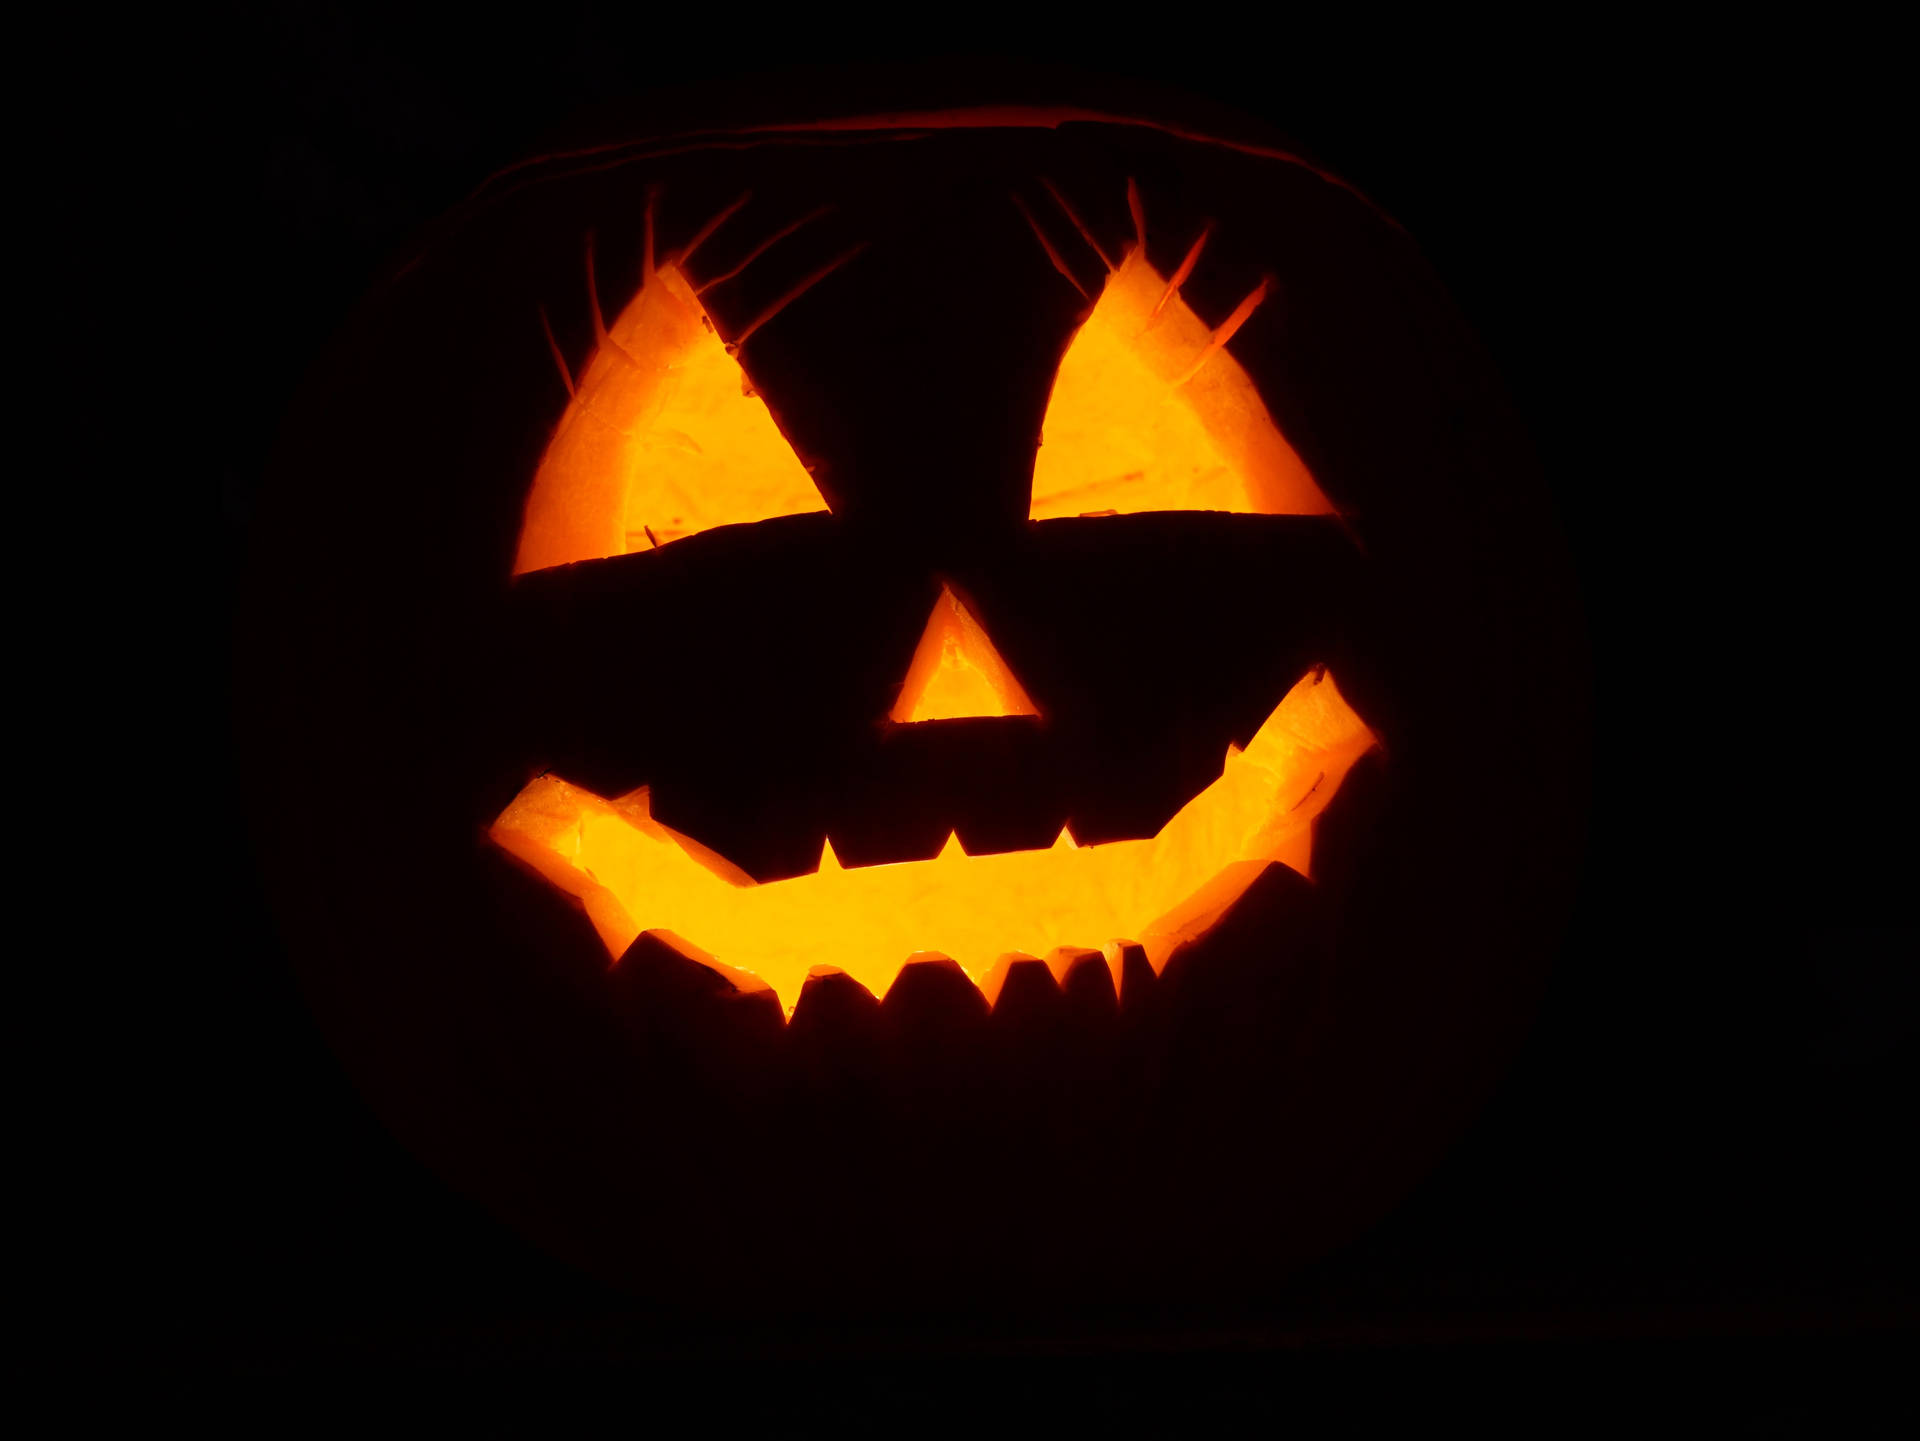 Trick or Treat - Celebrate Halloween with a Black Pumpkin Wallpaper